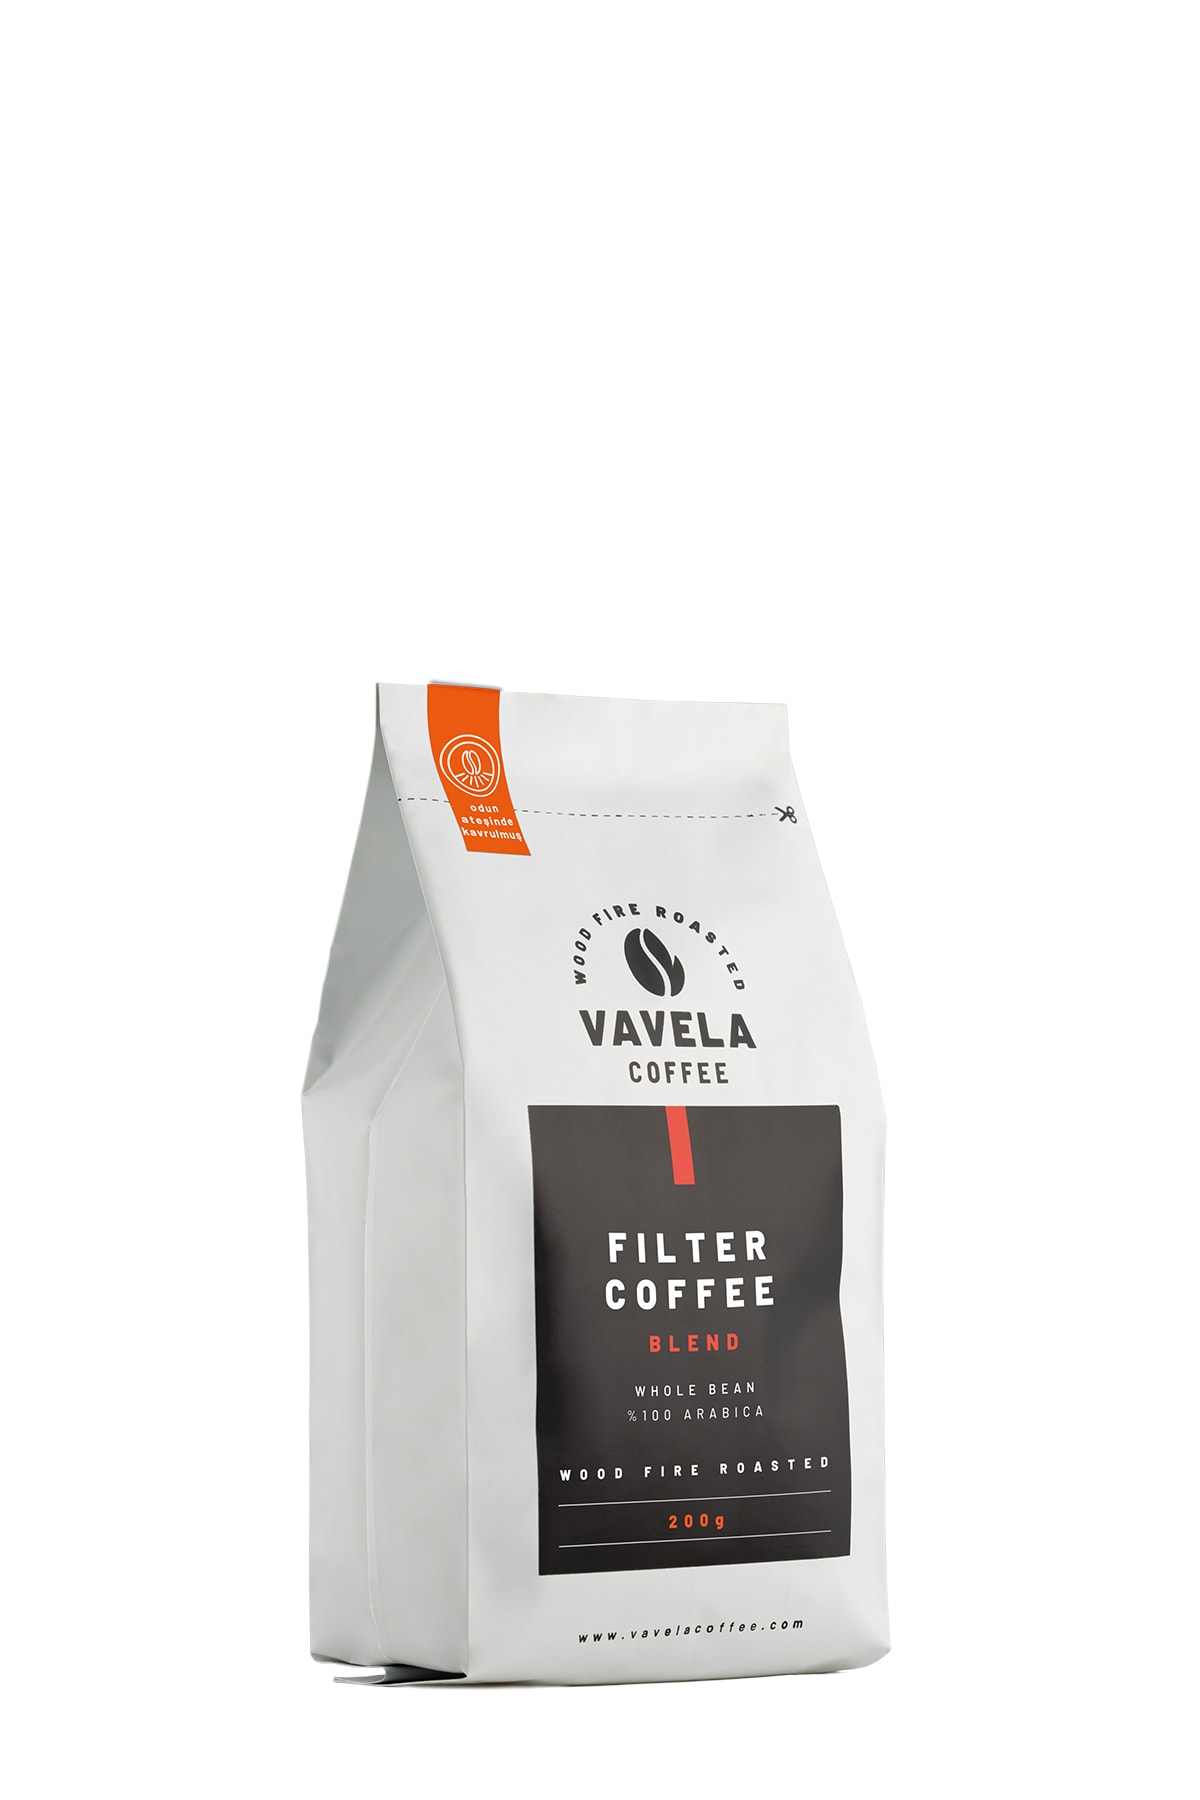 Vavela Coffee - Filter Coffee Blend 250g